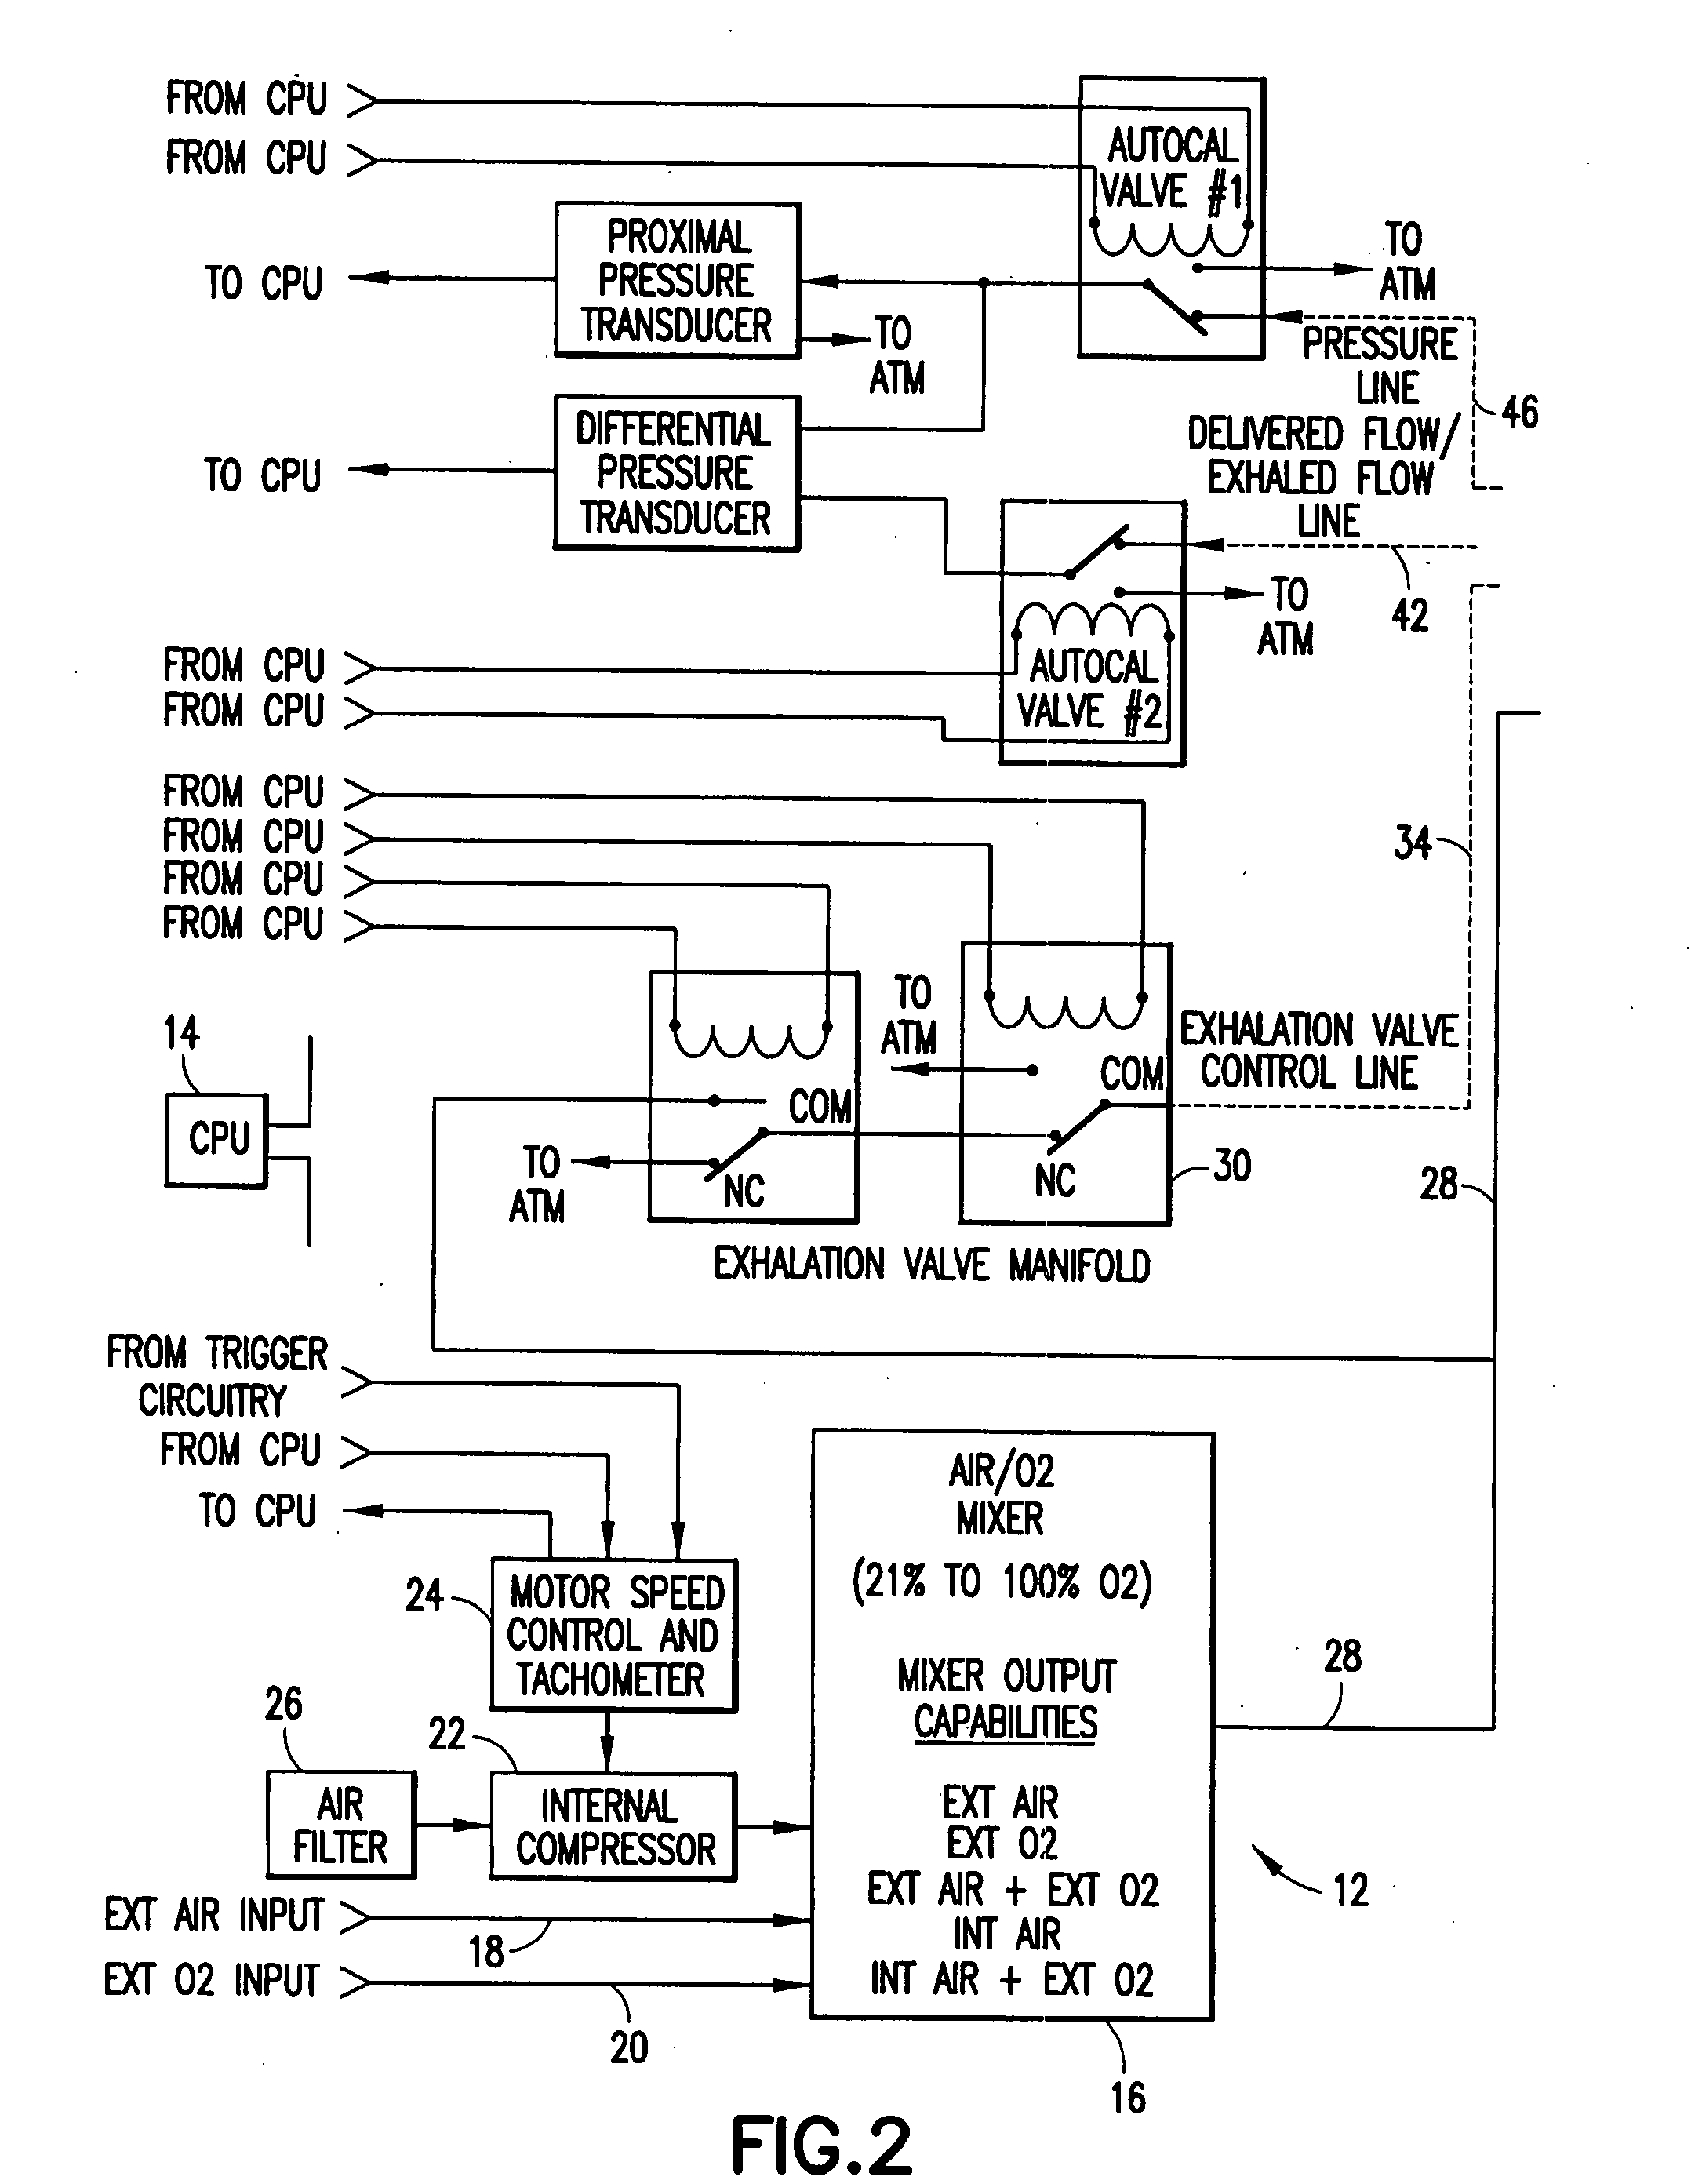 Ventilator circuit for oxygen generating system